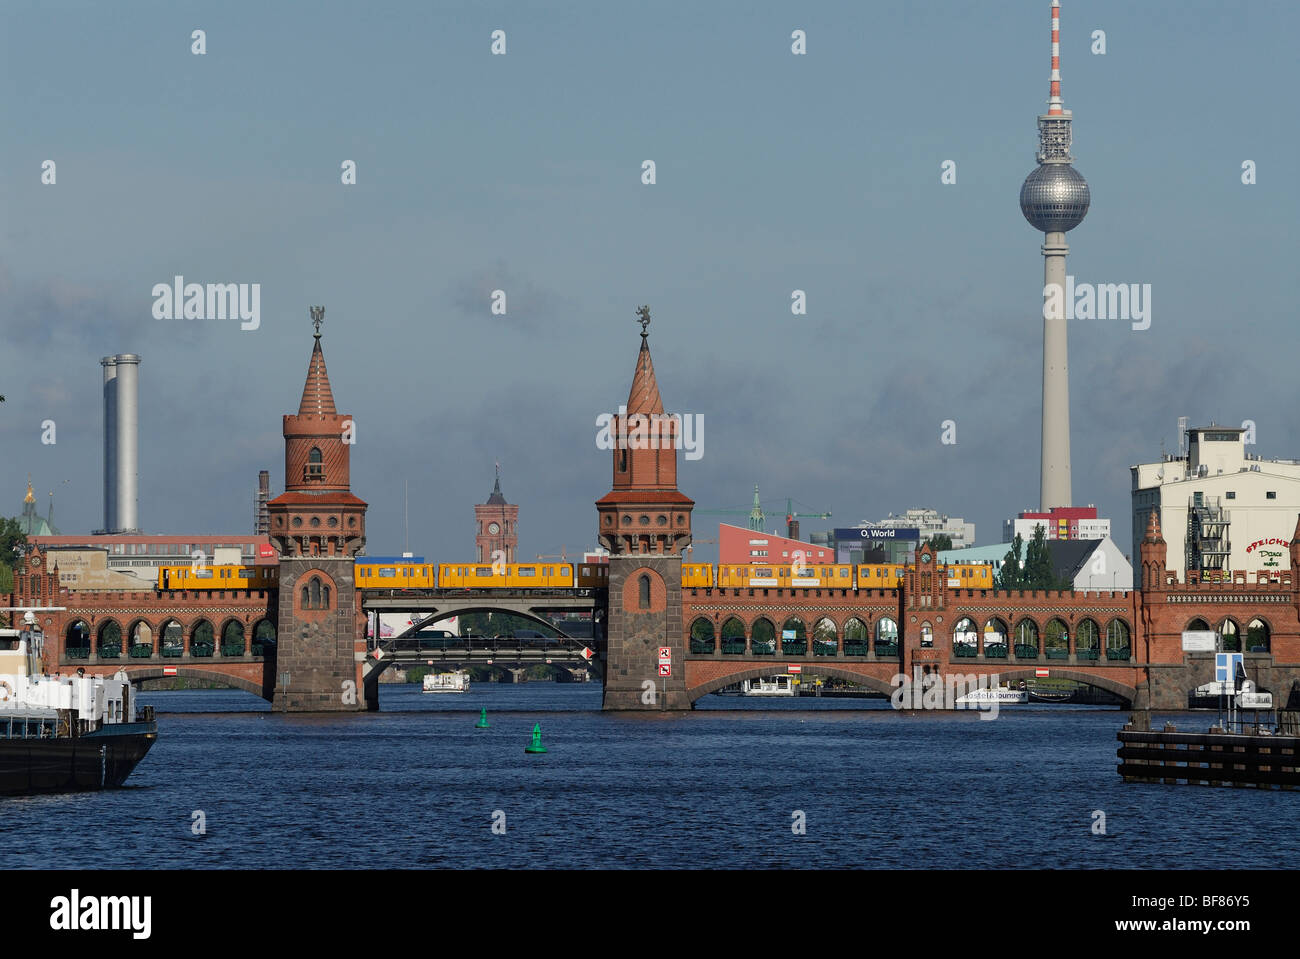 Berlin. Germany. The Oberbaum bridge spans the River Spree connecting Friedrichschain & Kreuzberg. Stock Photo